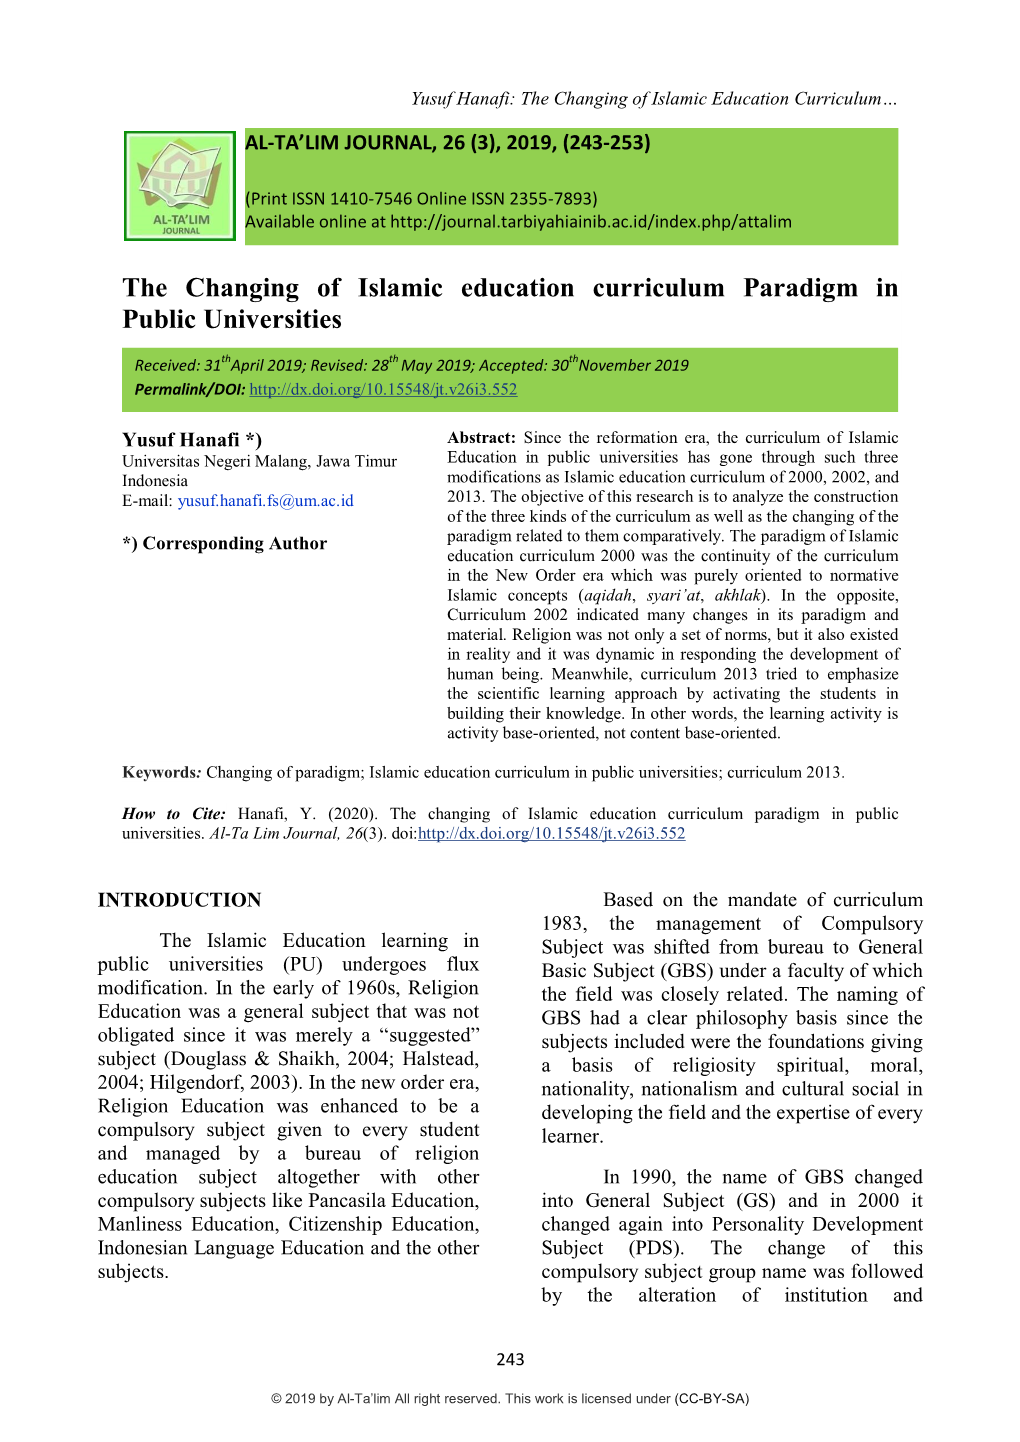 The Changing of Islamic Education Curriculum Paradigm in Public Universities